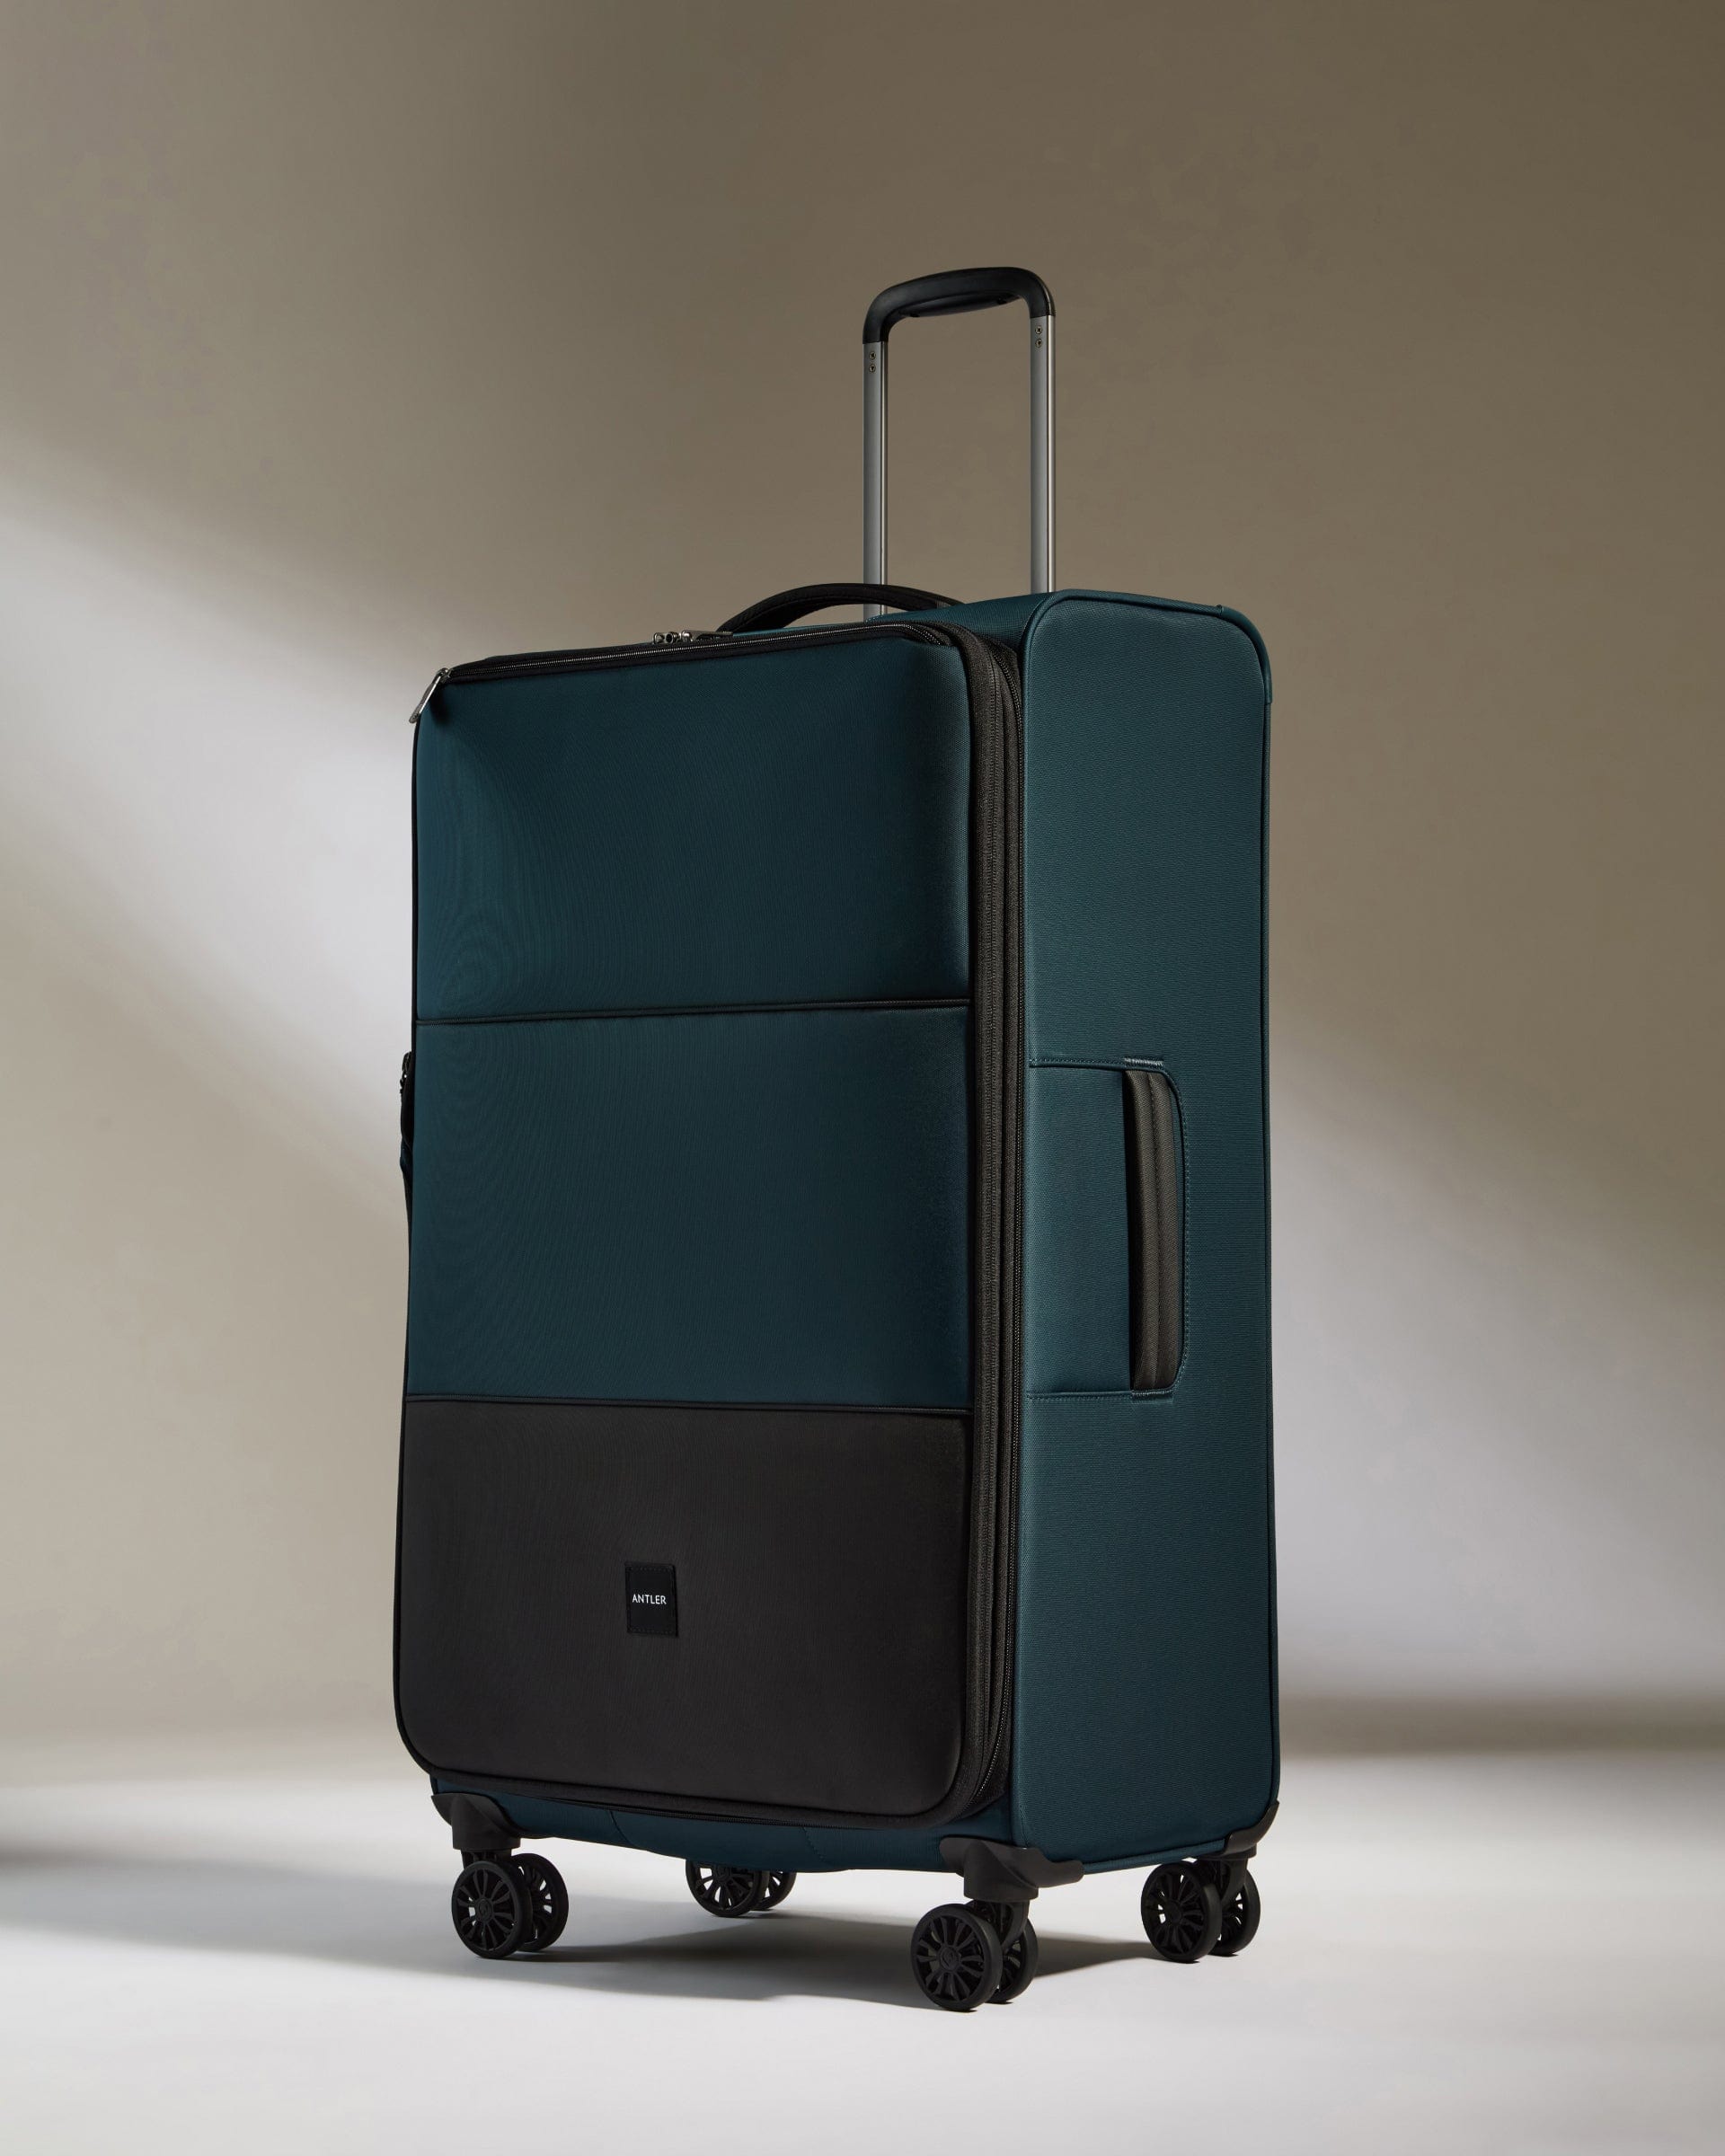 View Antler Soft Stripe Large Suitcase In Indigo Size 31cm x 83cm x 465cm information